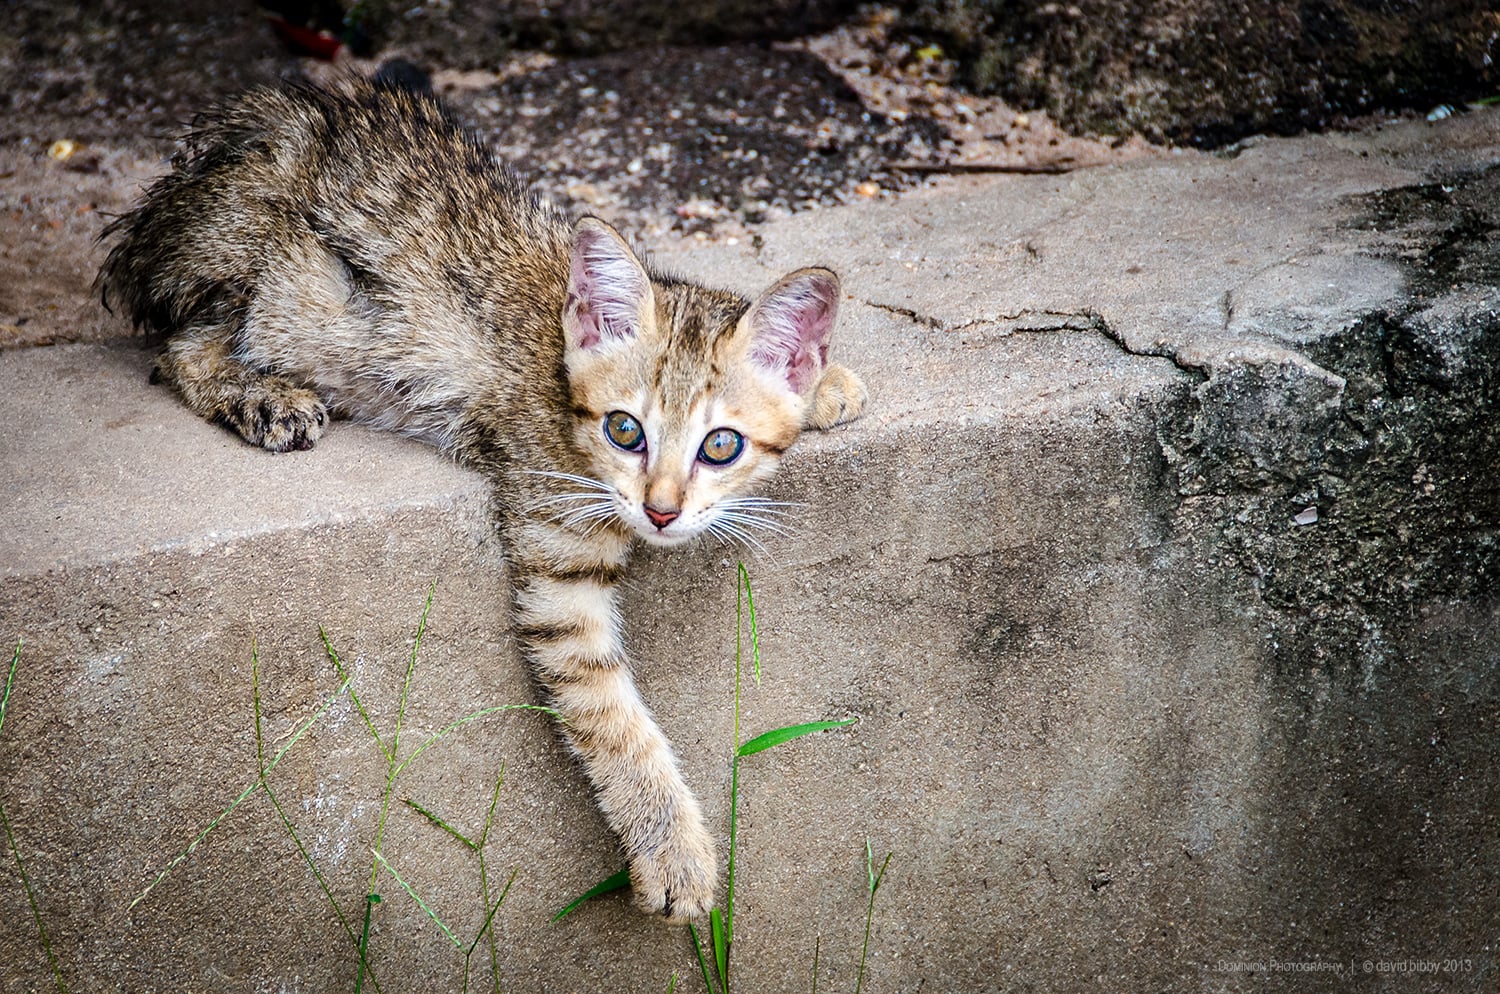   Manky kitten  - Kitten teaching some grass not to mess with it. Near Dam Dek, Siem Reap Province, Cambodia. 